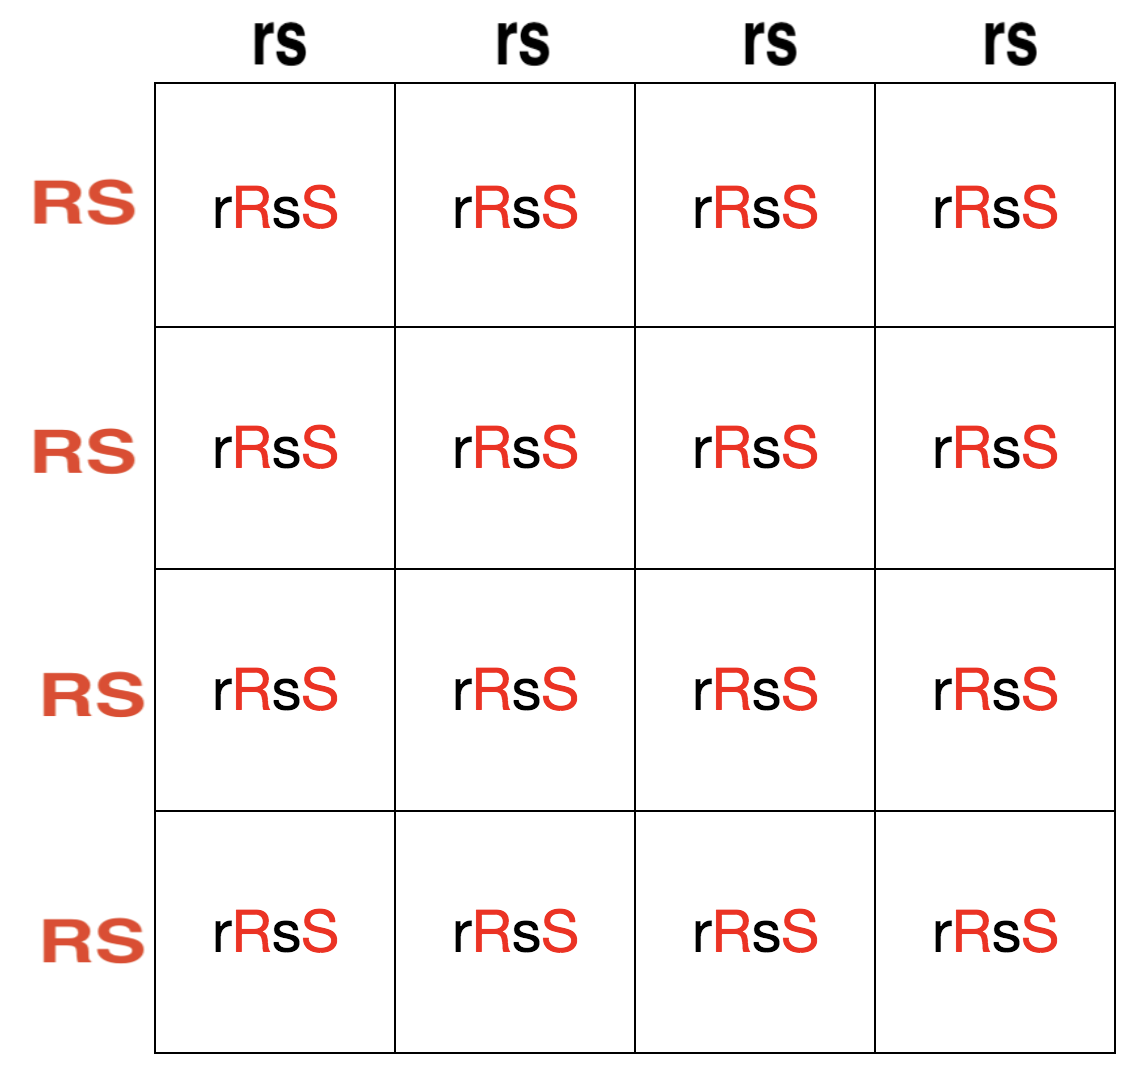 Dihybrid Punnett square set up showing genotype ratios of a rrss x RRSS cross